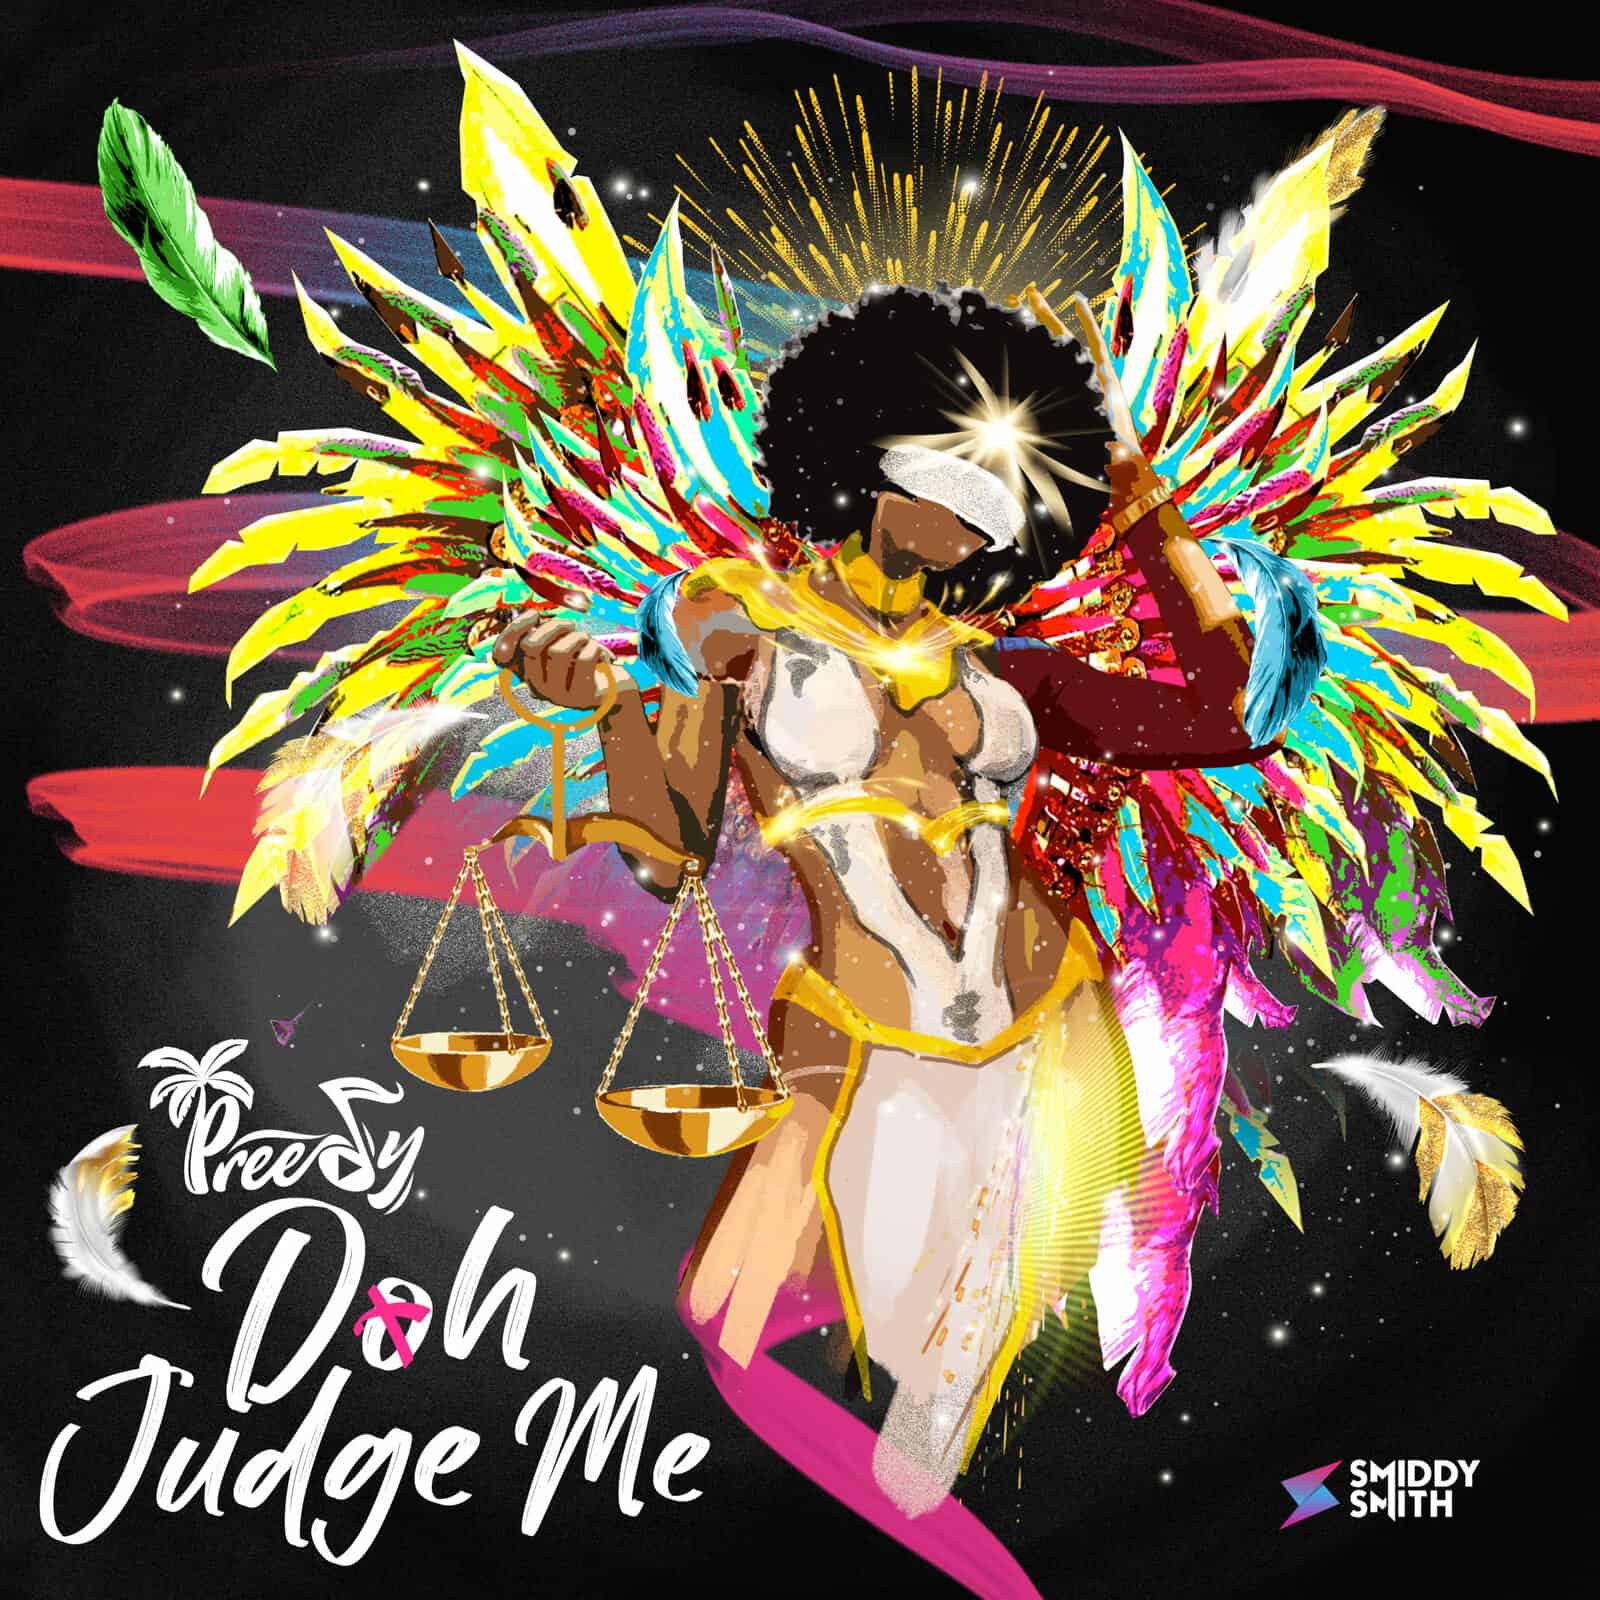 Preedy - Doh Judge Me